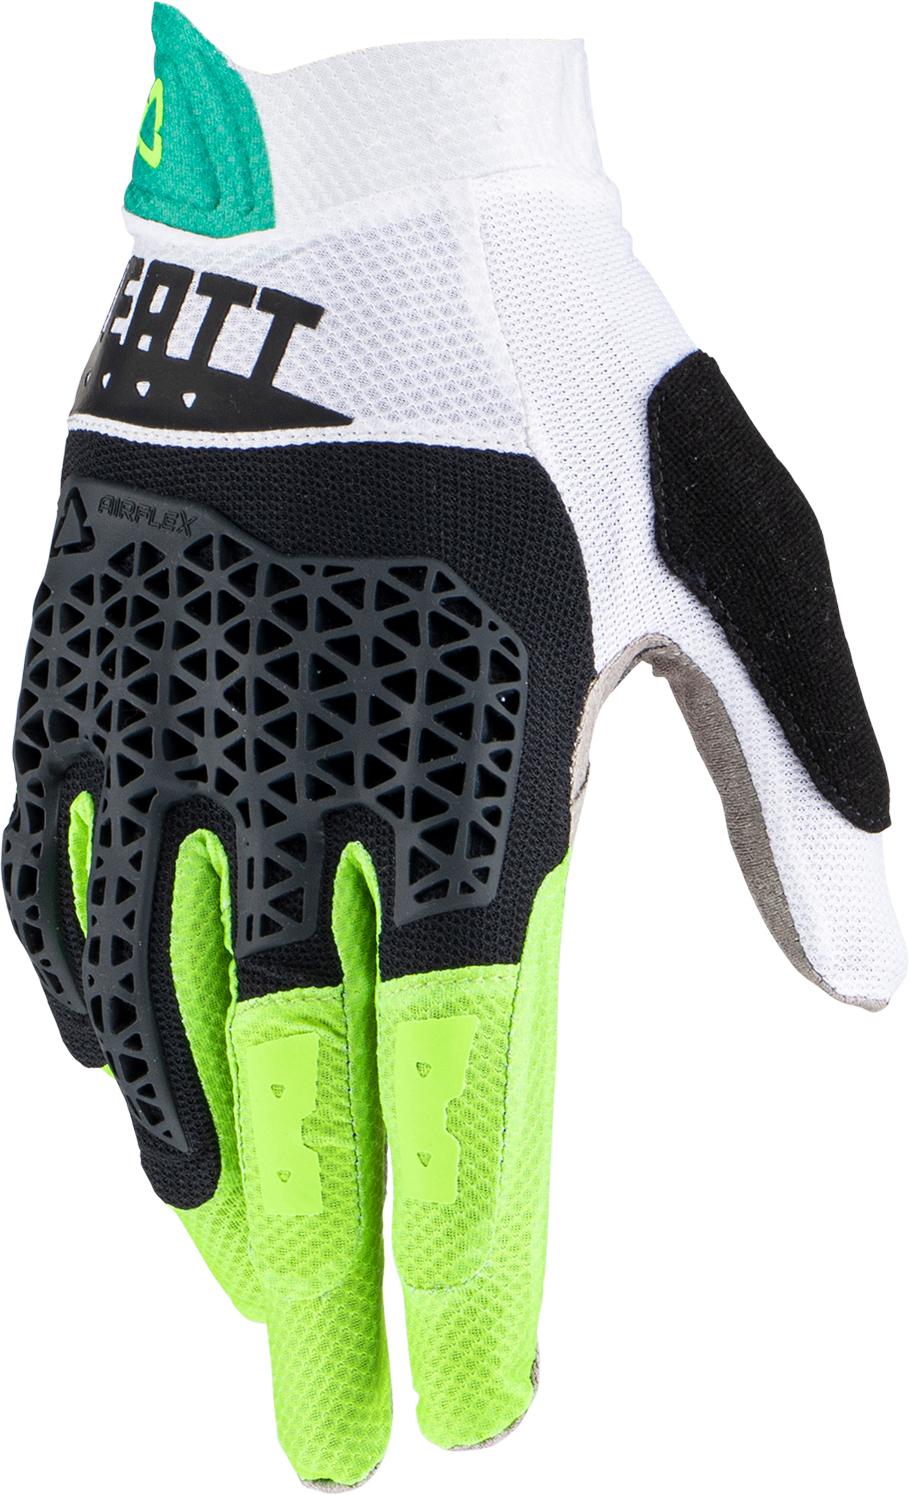 Leatt Mtb 4.0 Lite Gloves - Jade